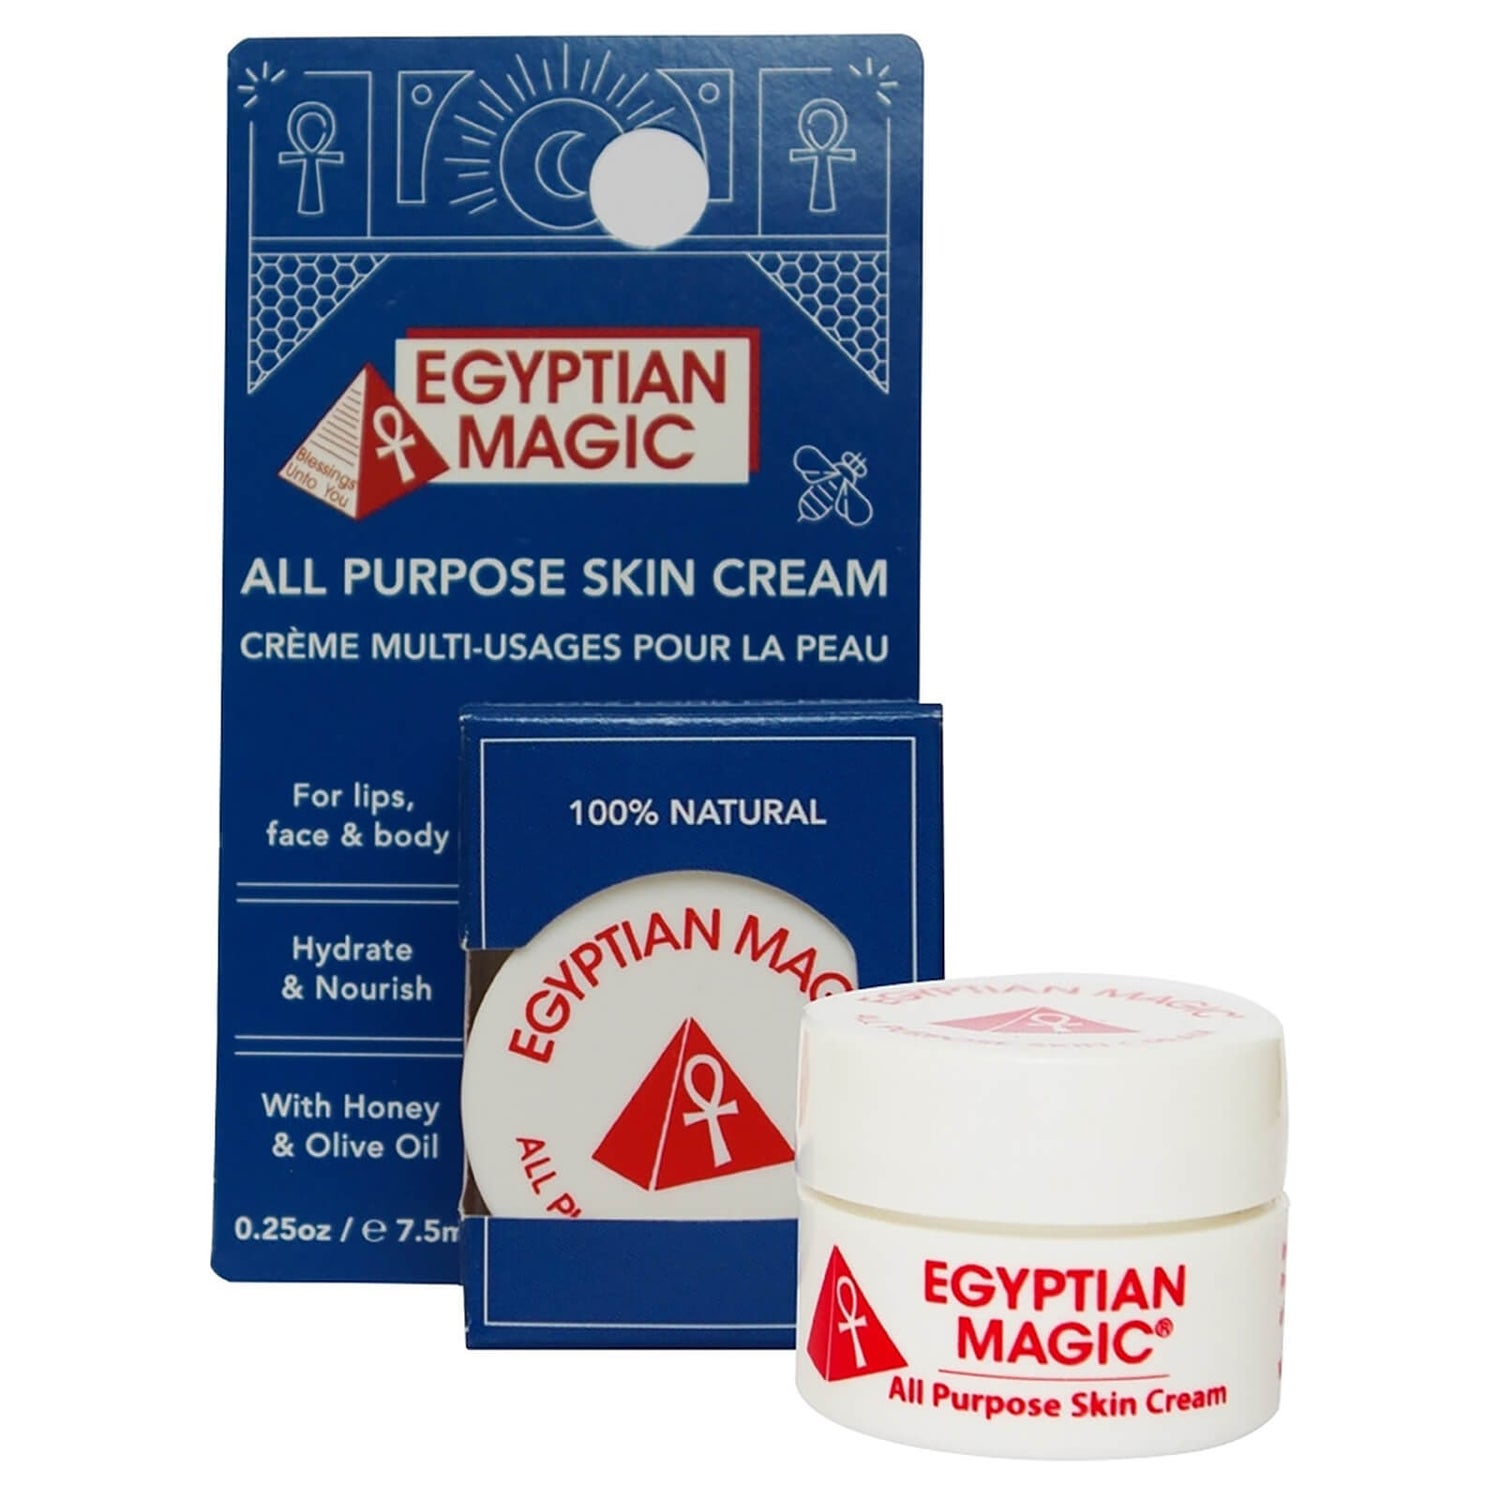 Egyptian Magic All Purpose Skin Cream 0.25oz